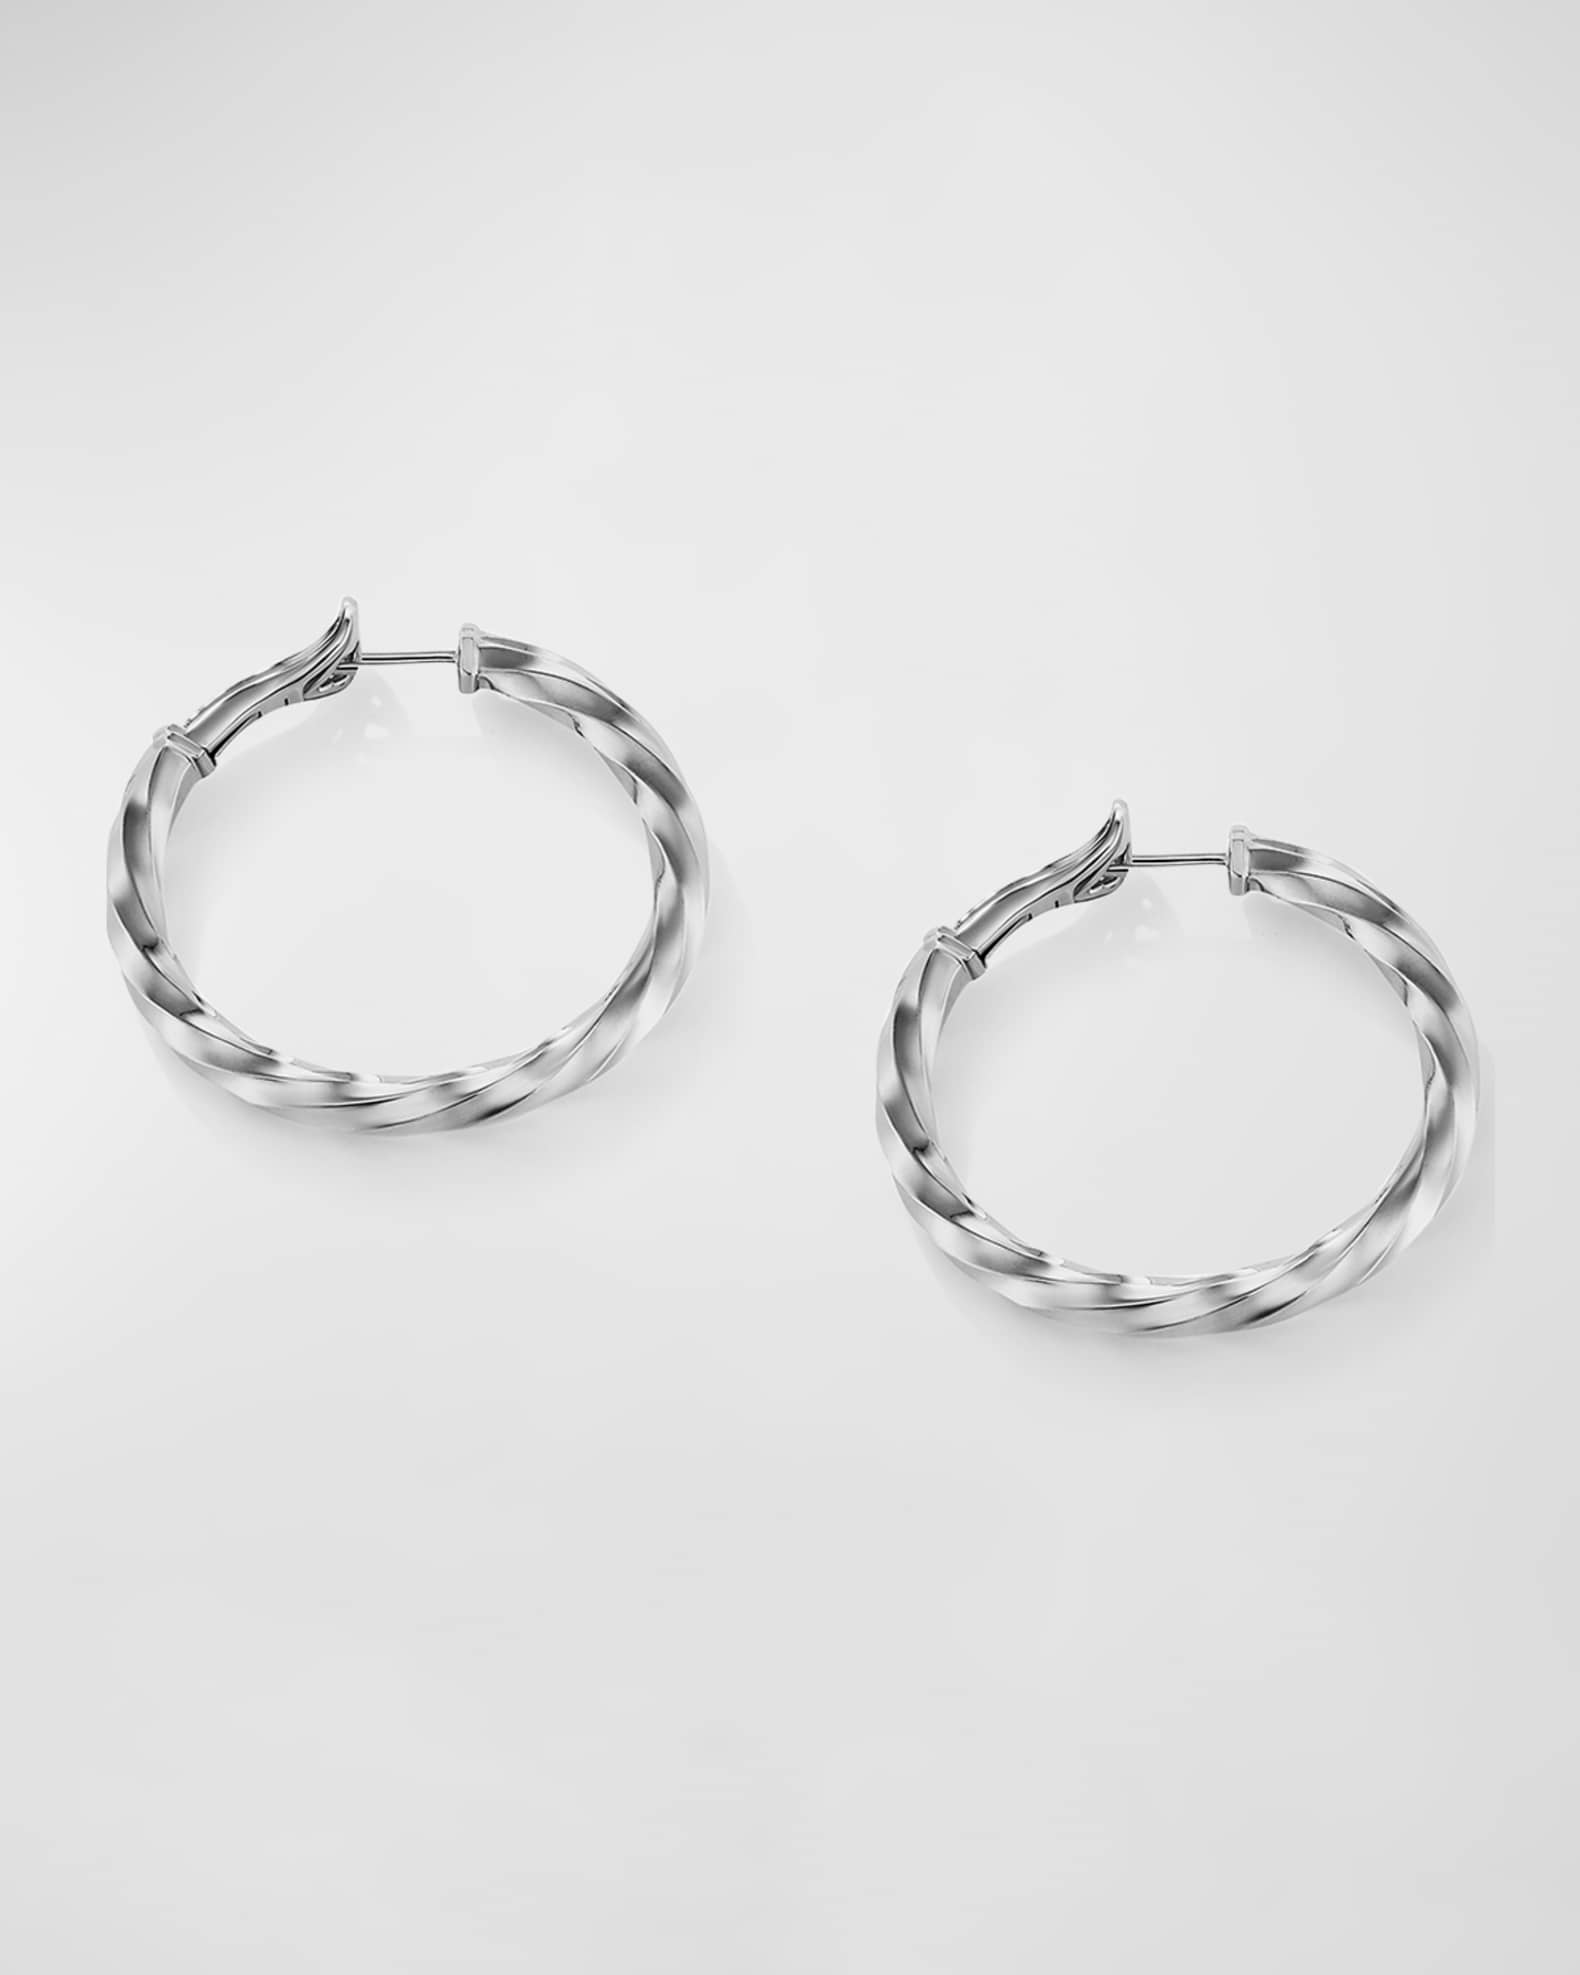 David Yurman Cable Edge Hoop Earrings in Silver, 4mm, 1.5